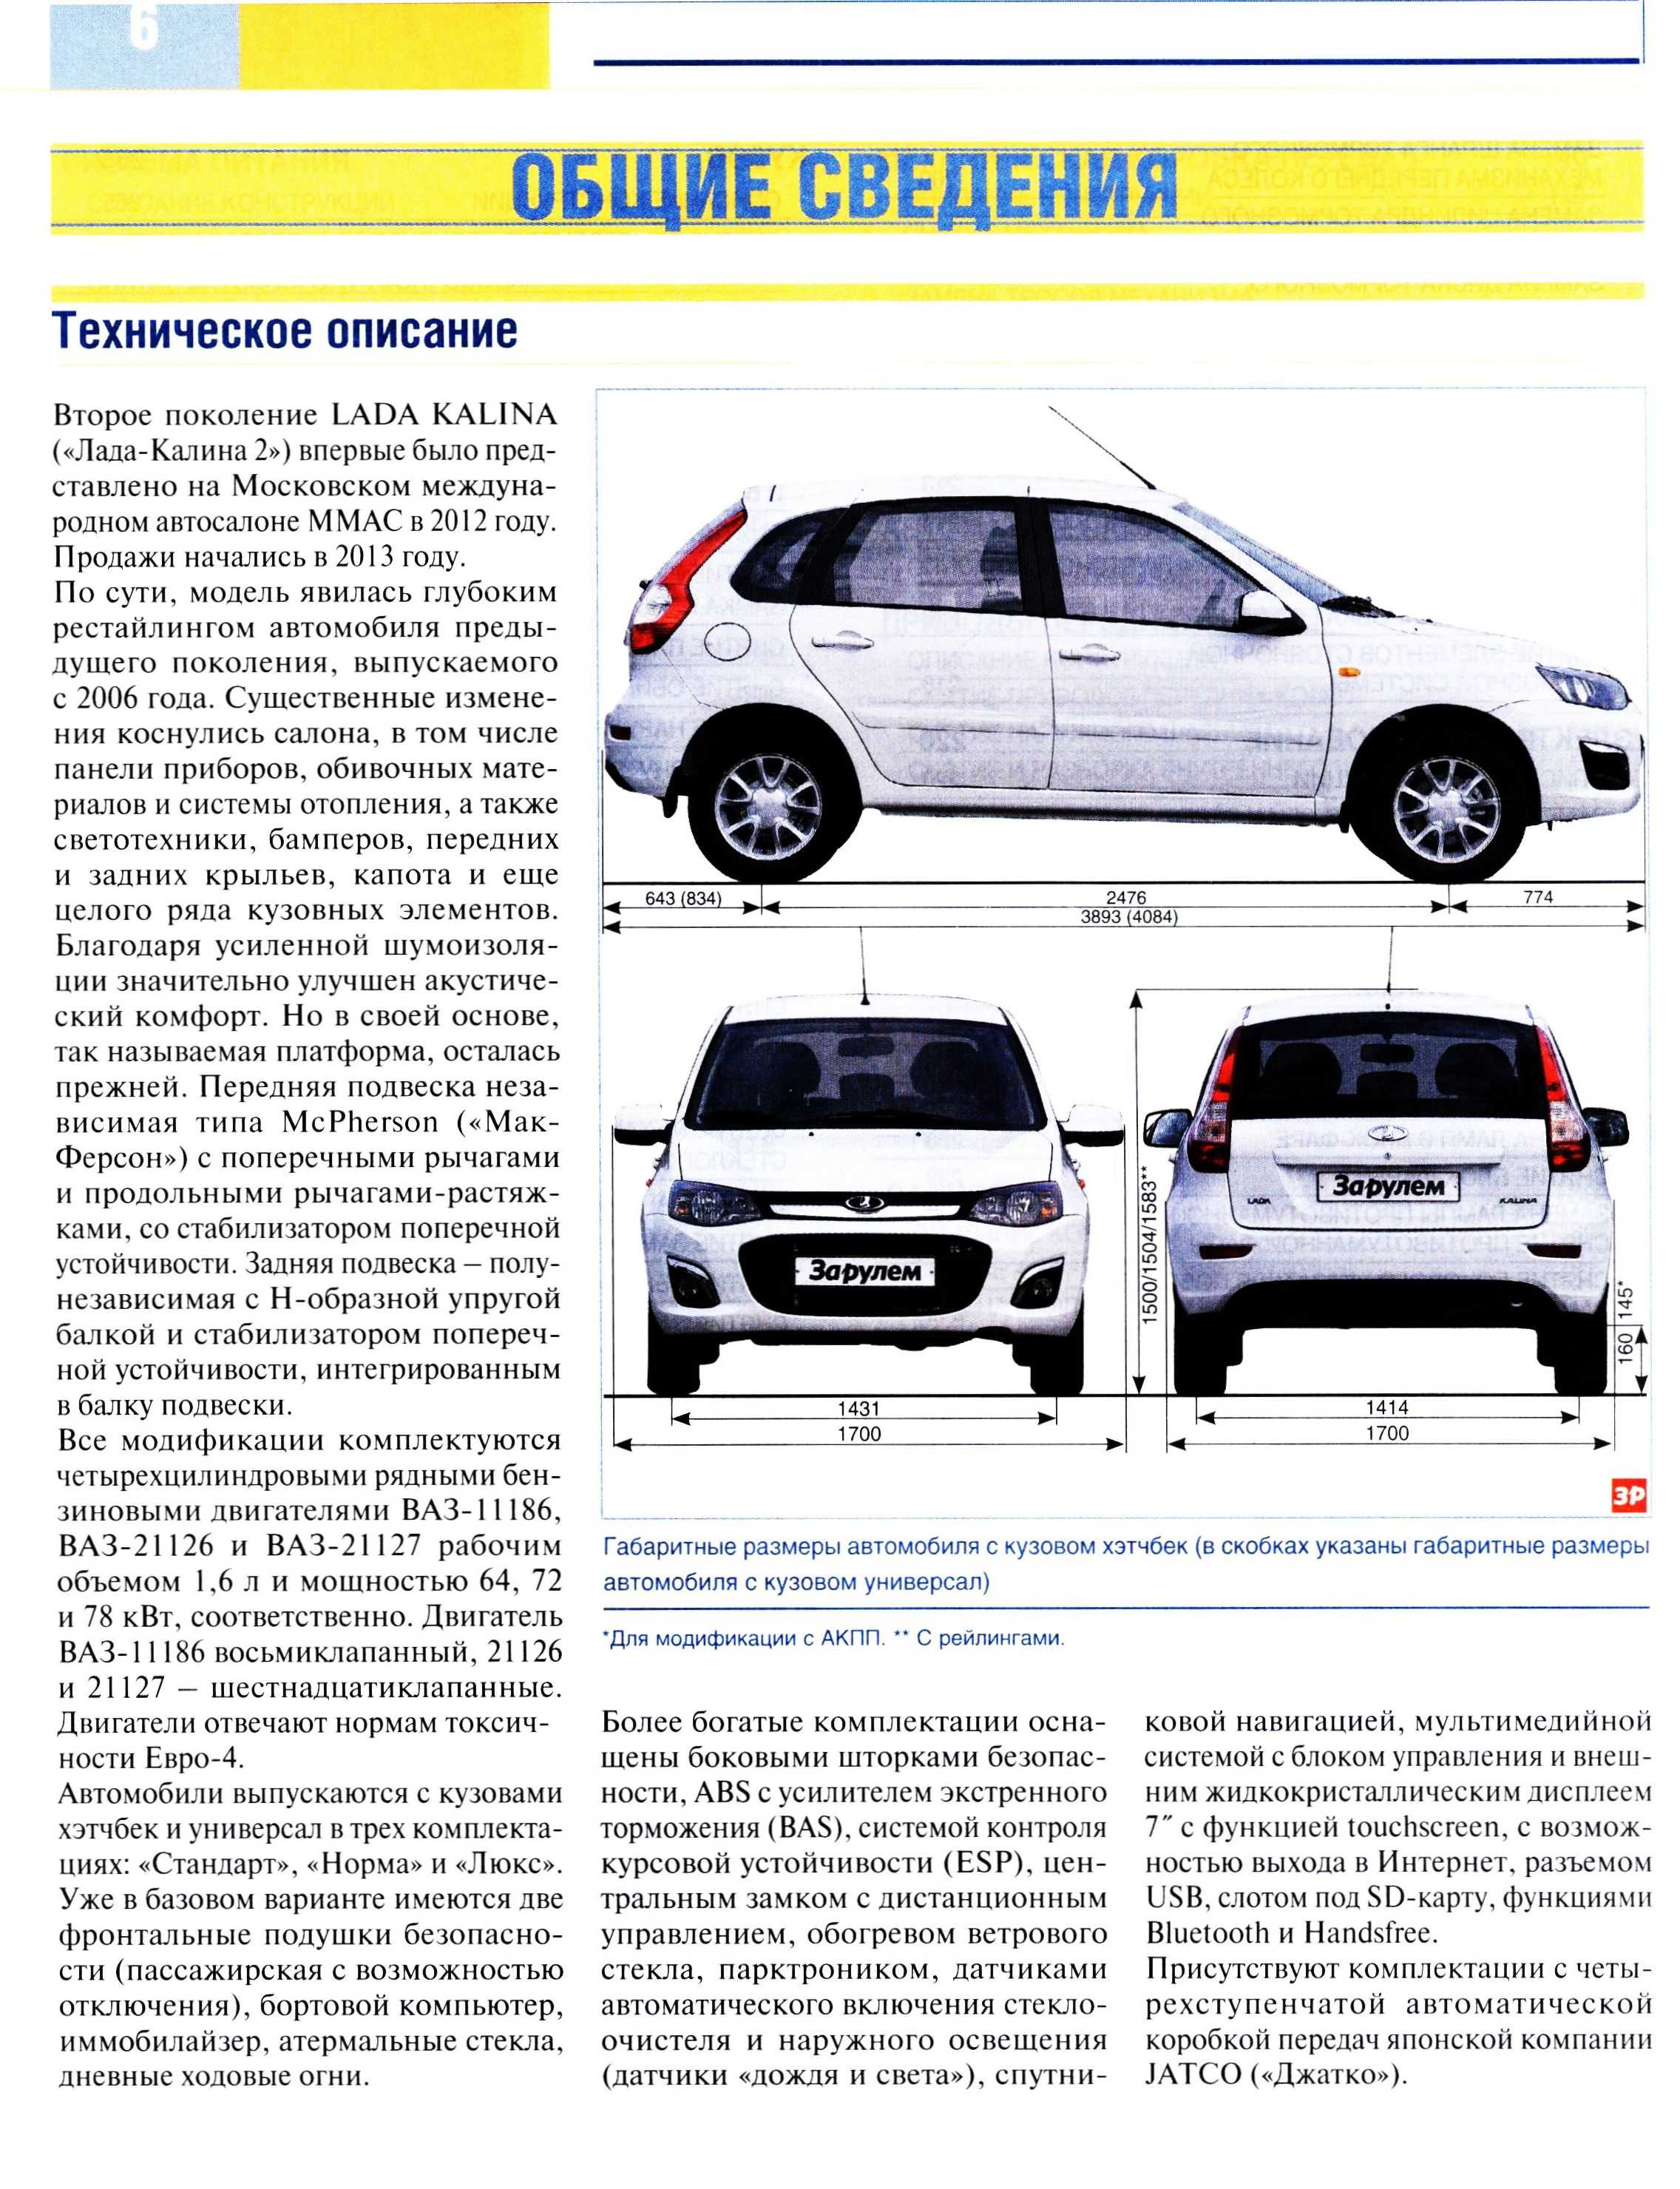 Лада калина: габариты разных модификаций автомобиля1ladakalina.ru